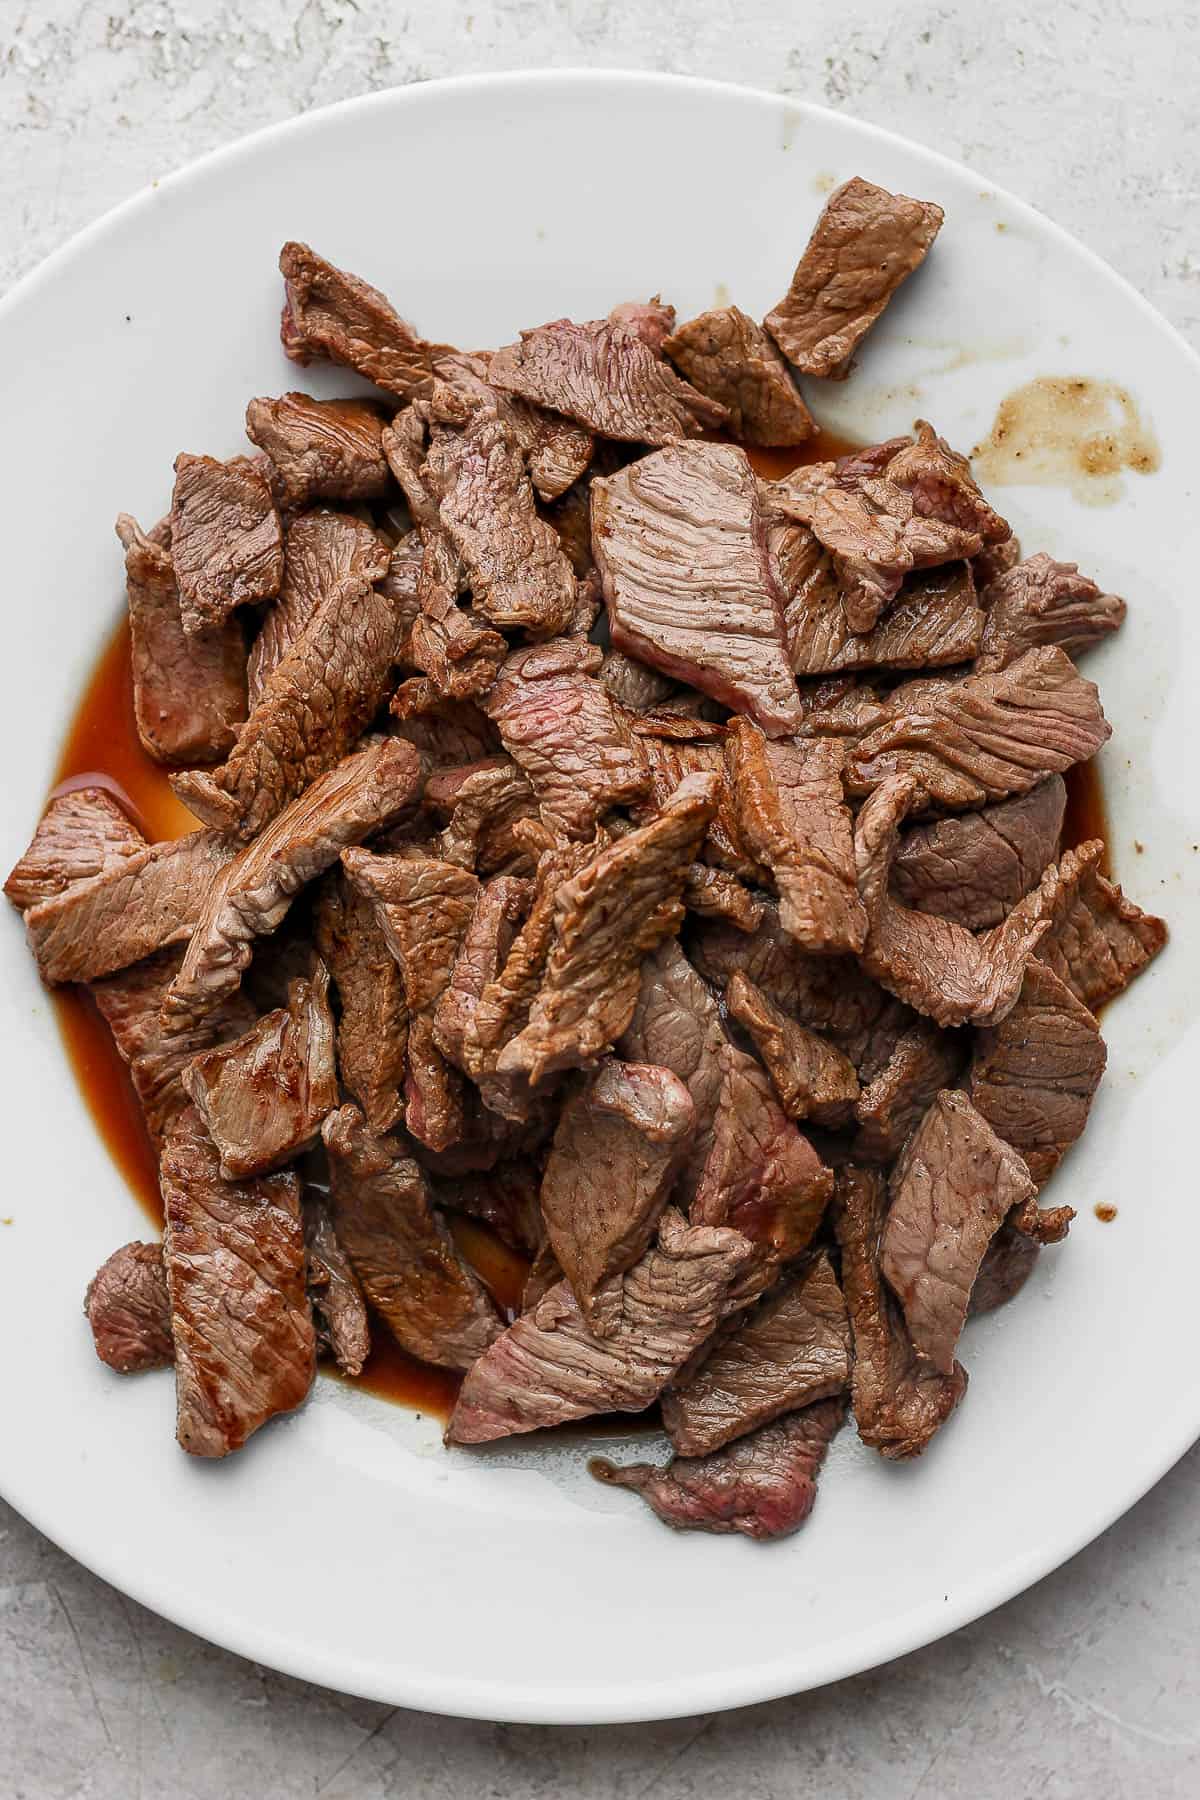 A plate full of seared sirloin steak strips.